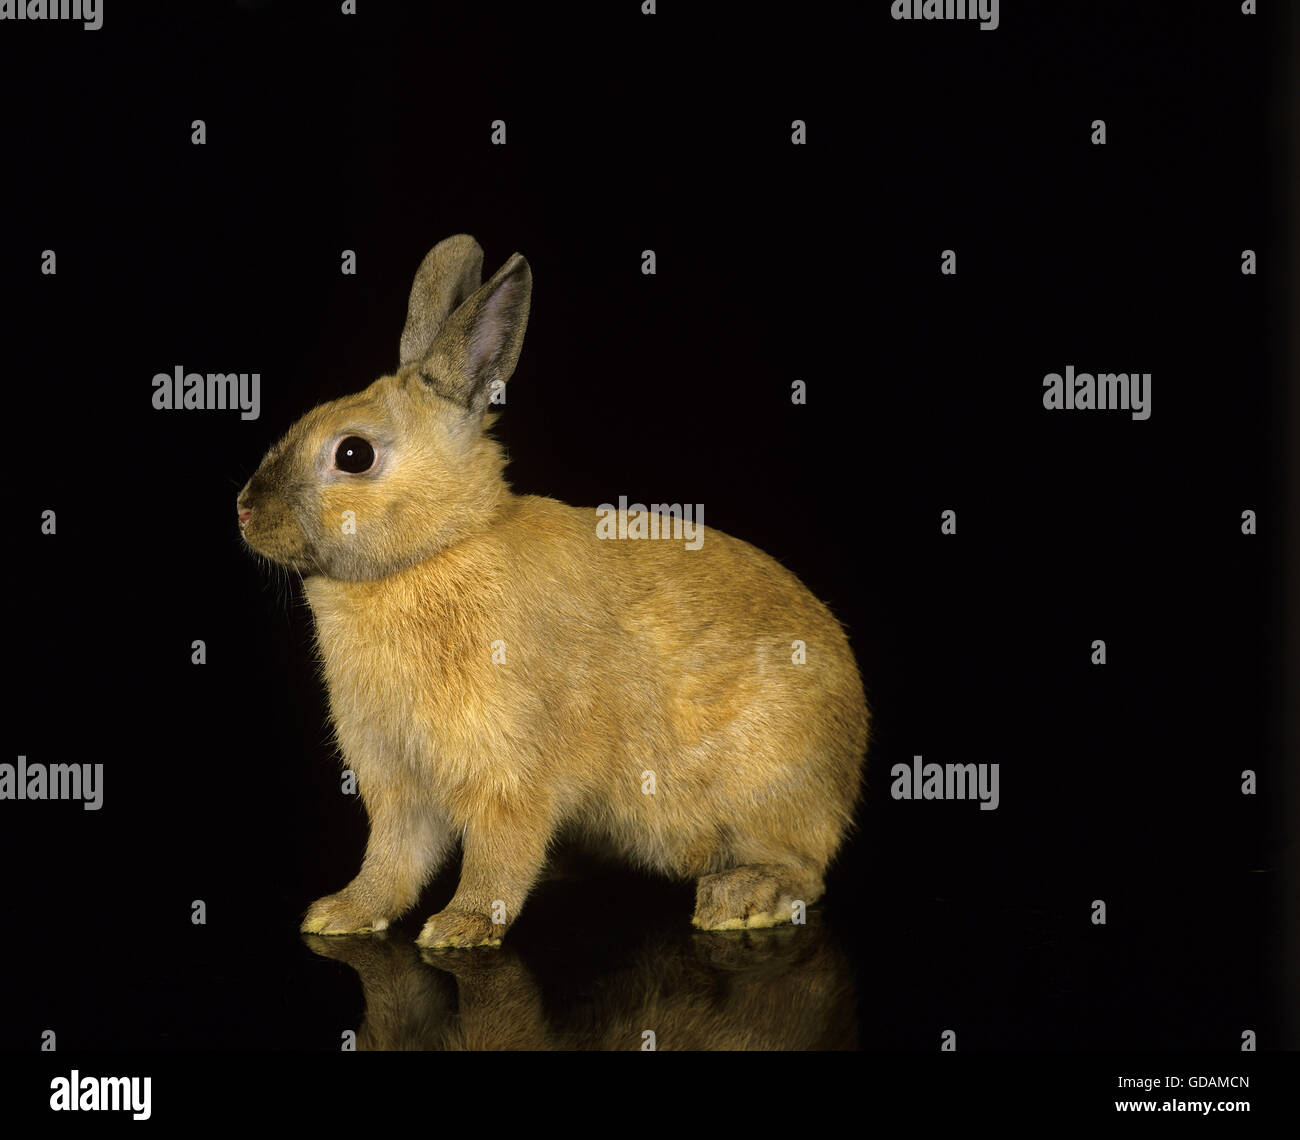 Conejo enano contra fondo negro Foto de stock